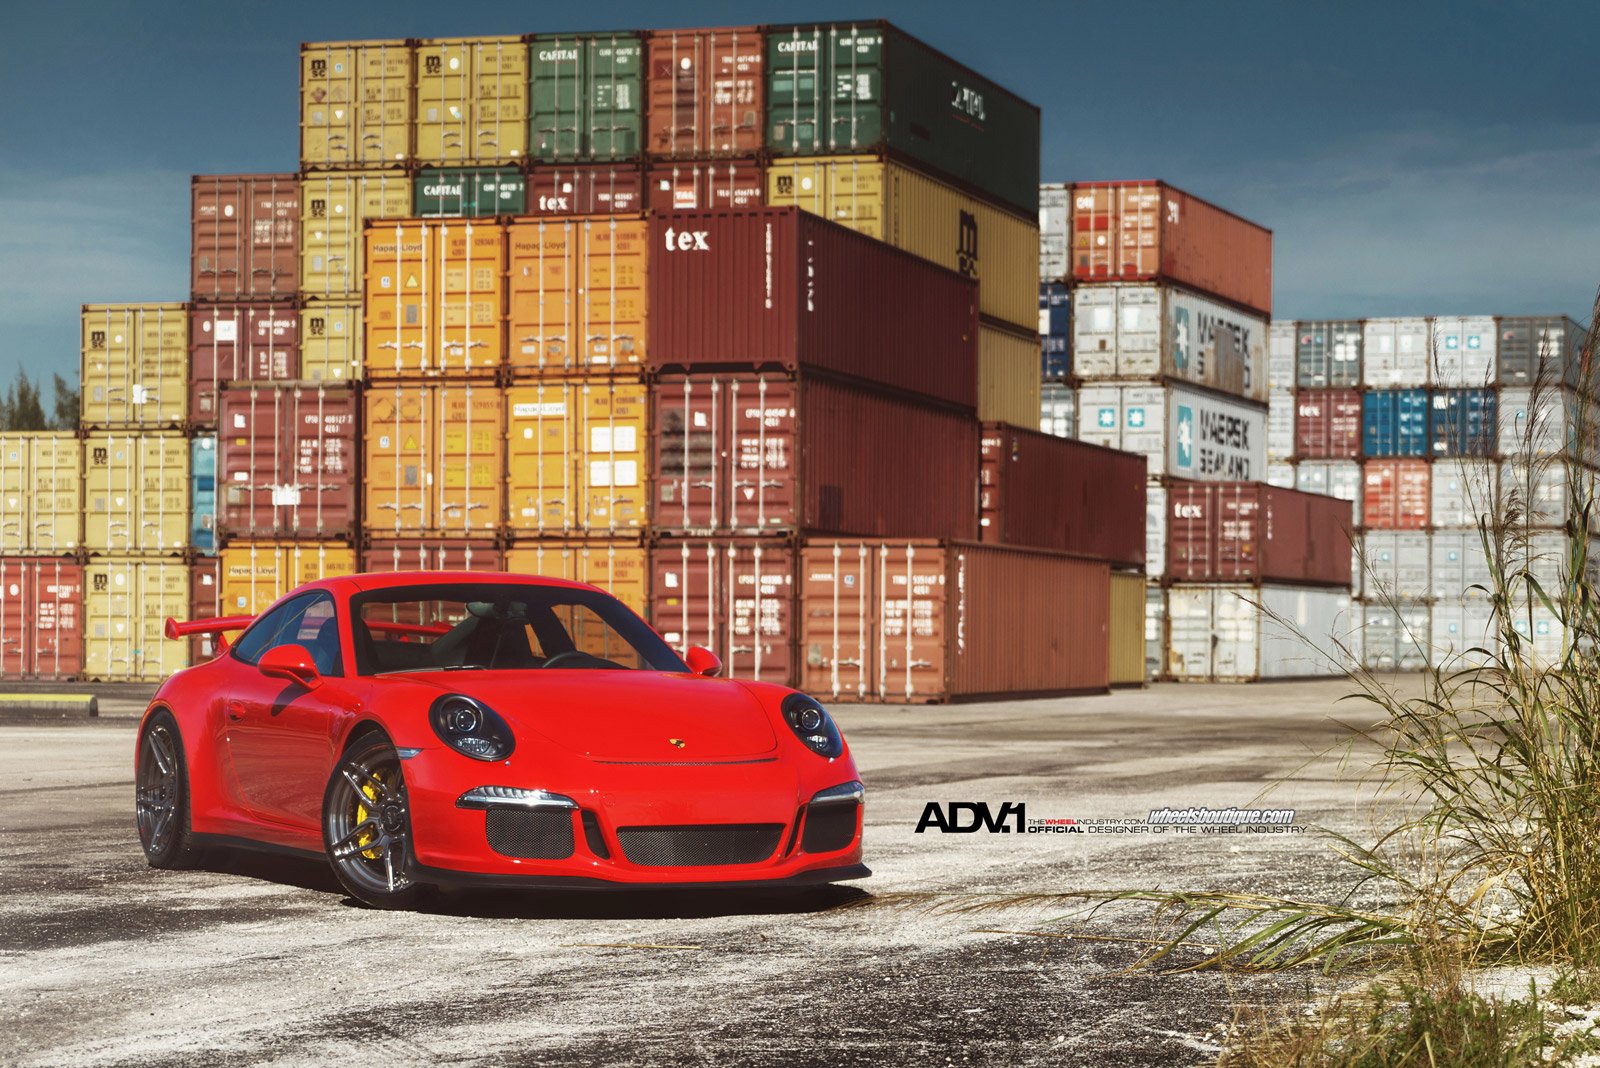 2014, Adv1, Porsche, 911, Gt3, Supercars, Tuning, Wheels, Cars Wallpaper